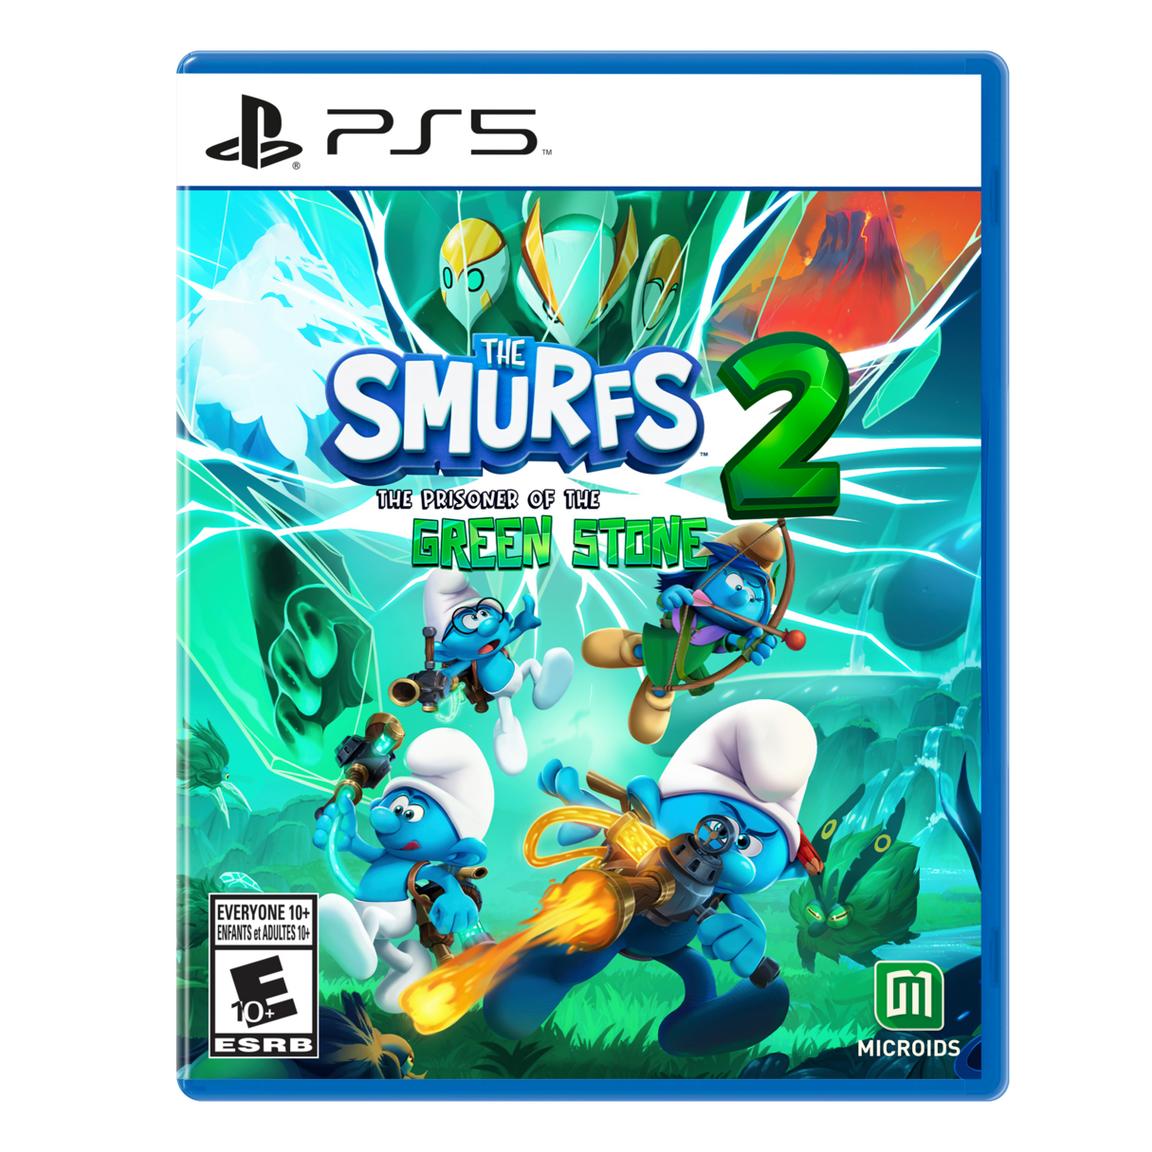 Видеоигра The Smurfs 2: Prisoner of the Green Stone - PlayStation 5 ps5 игра microids sifu